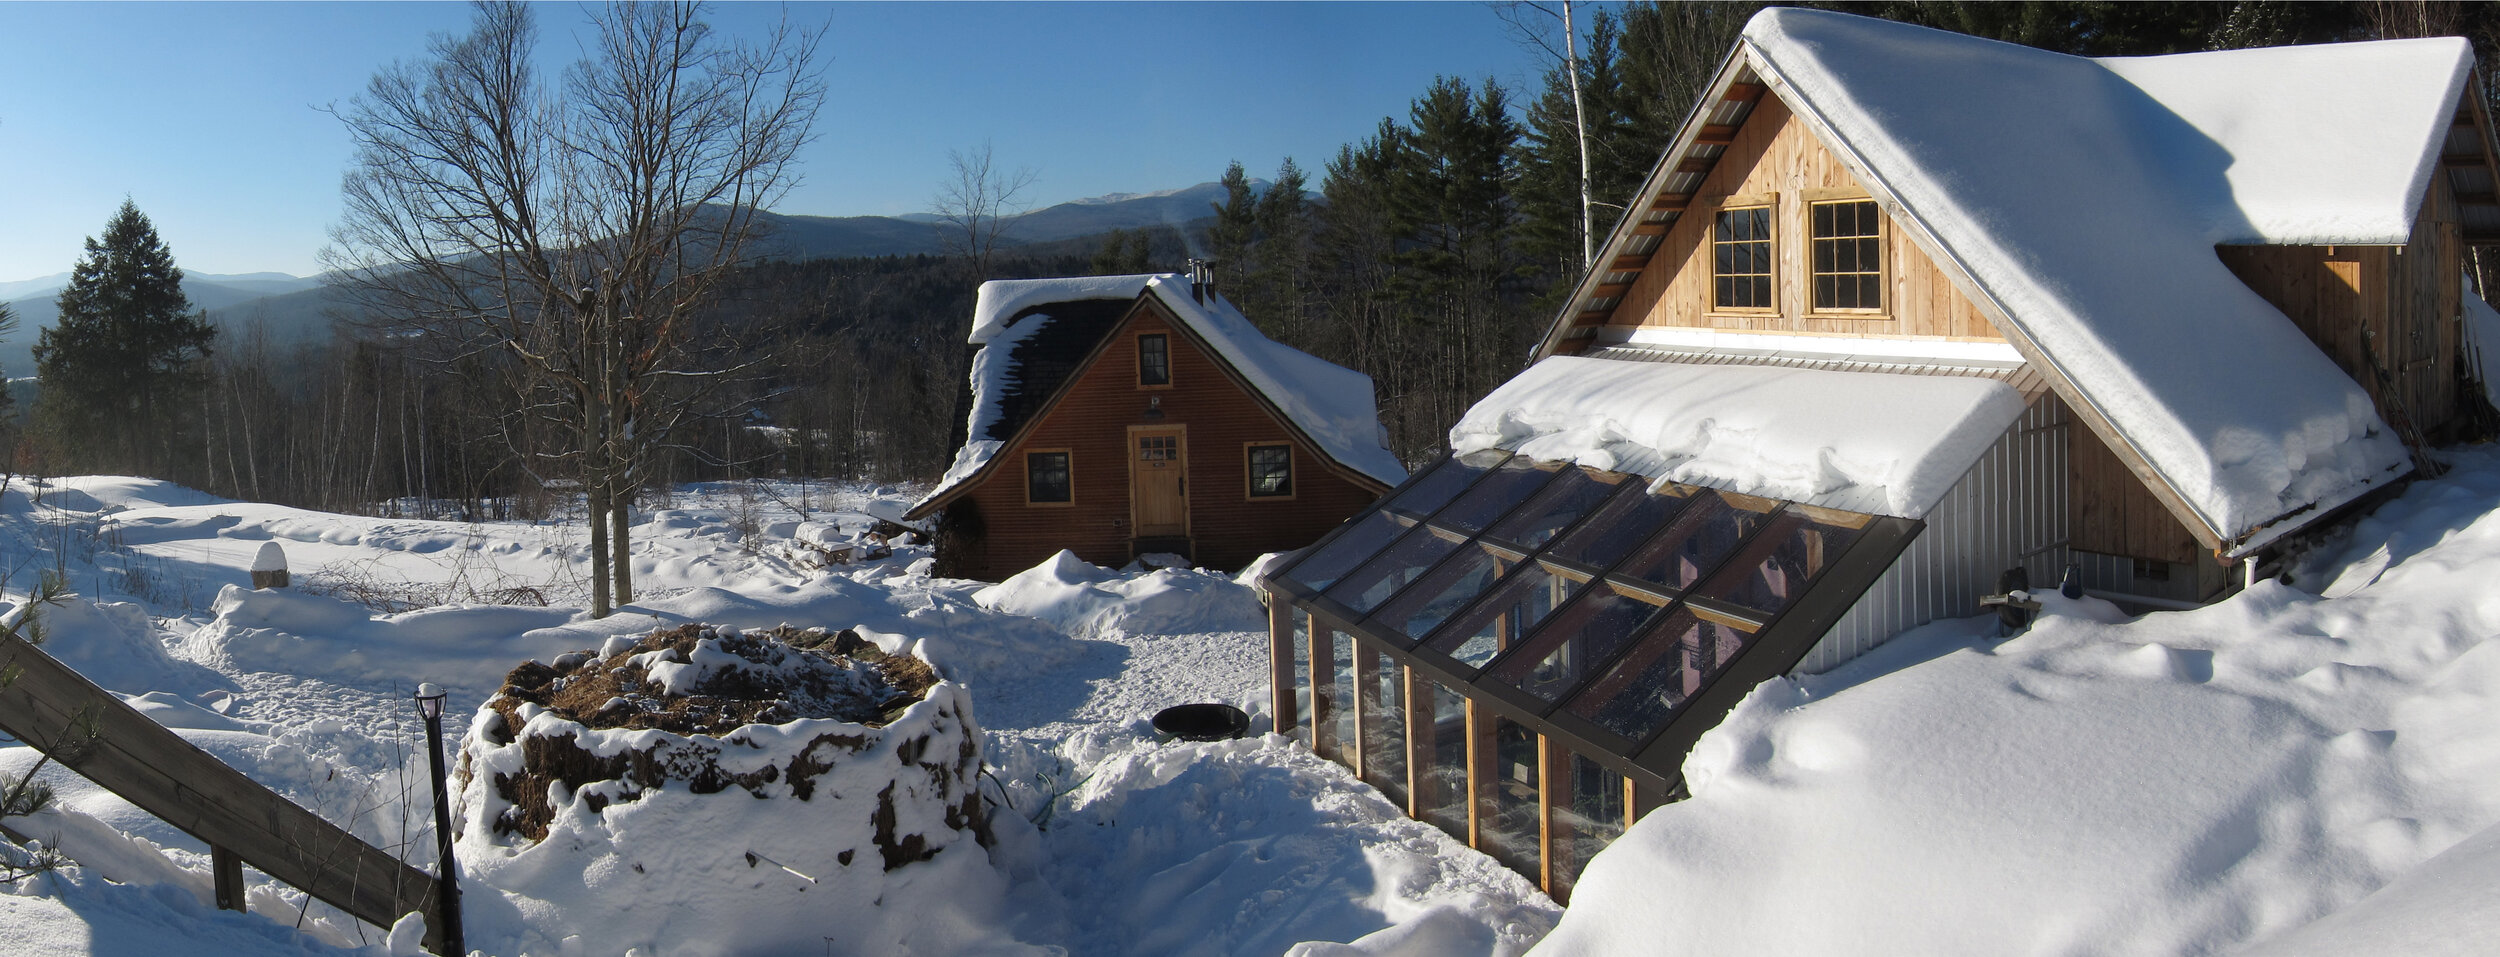 wsrf_greenhouse-studio-range-snow-sun-pain+mound.jpeg